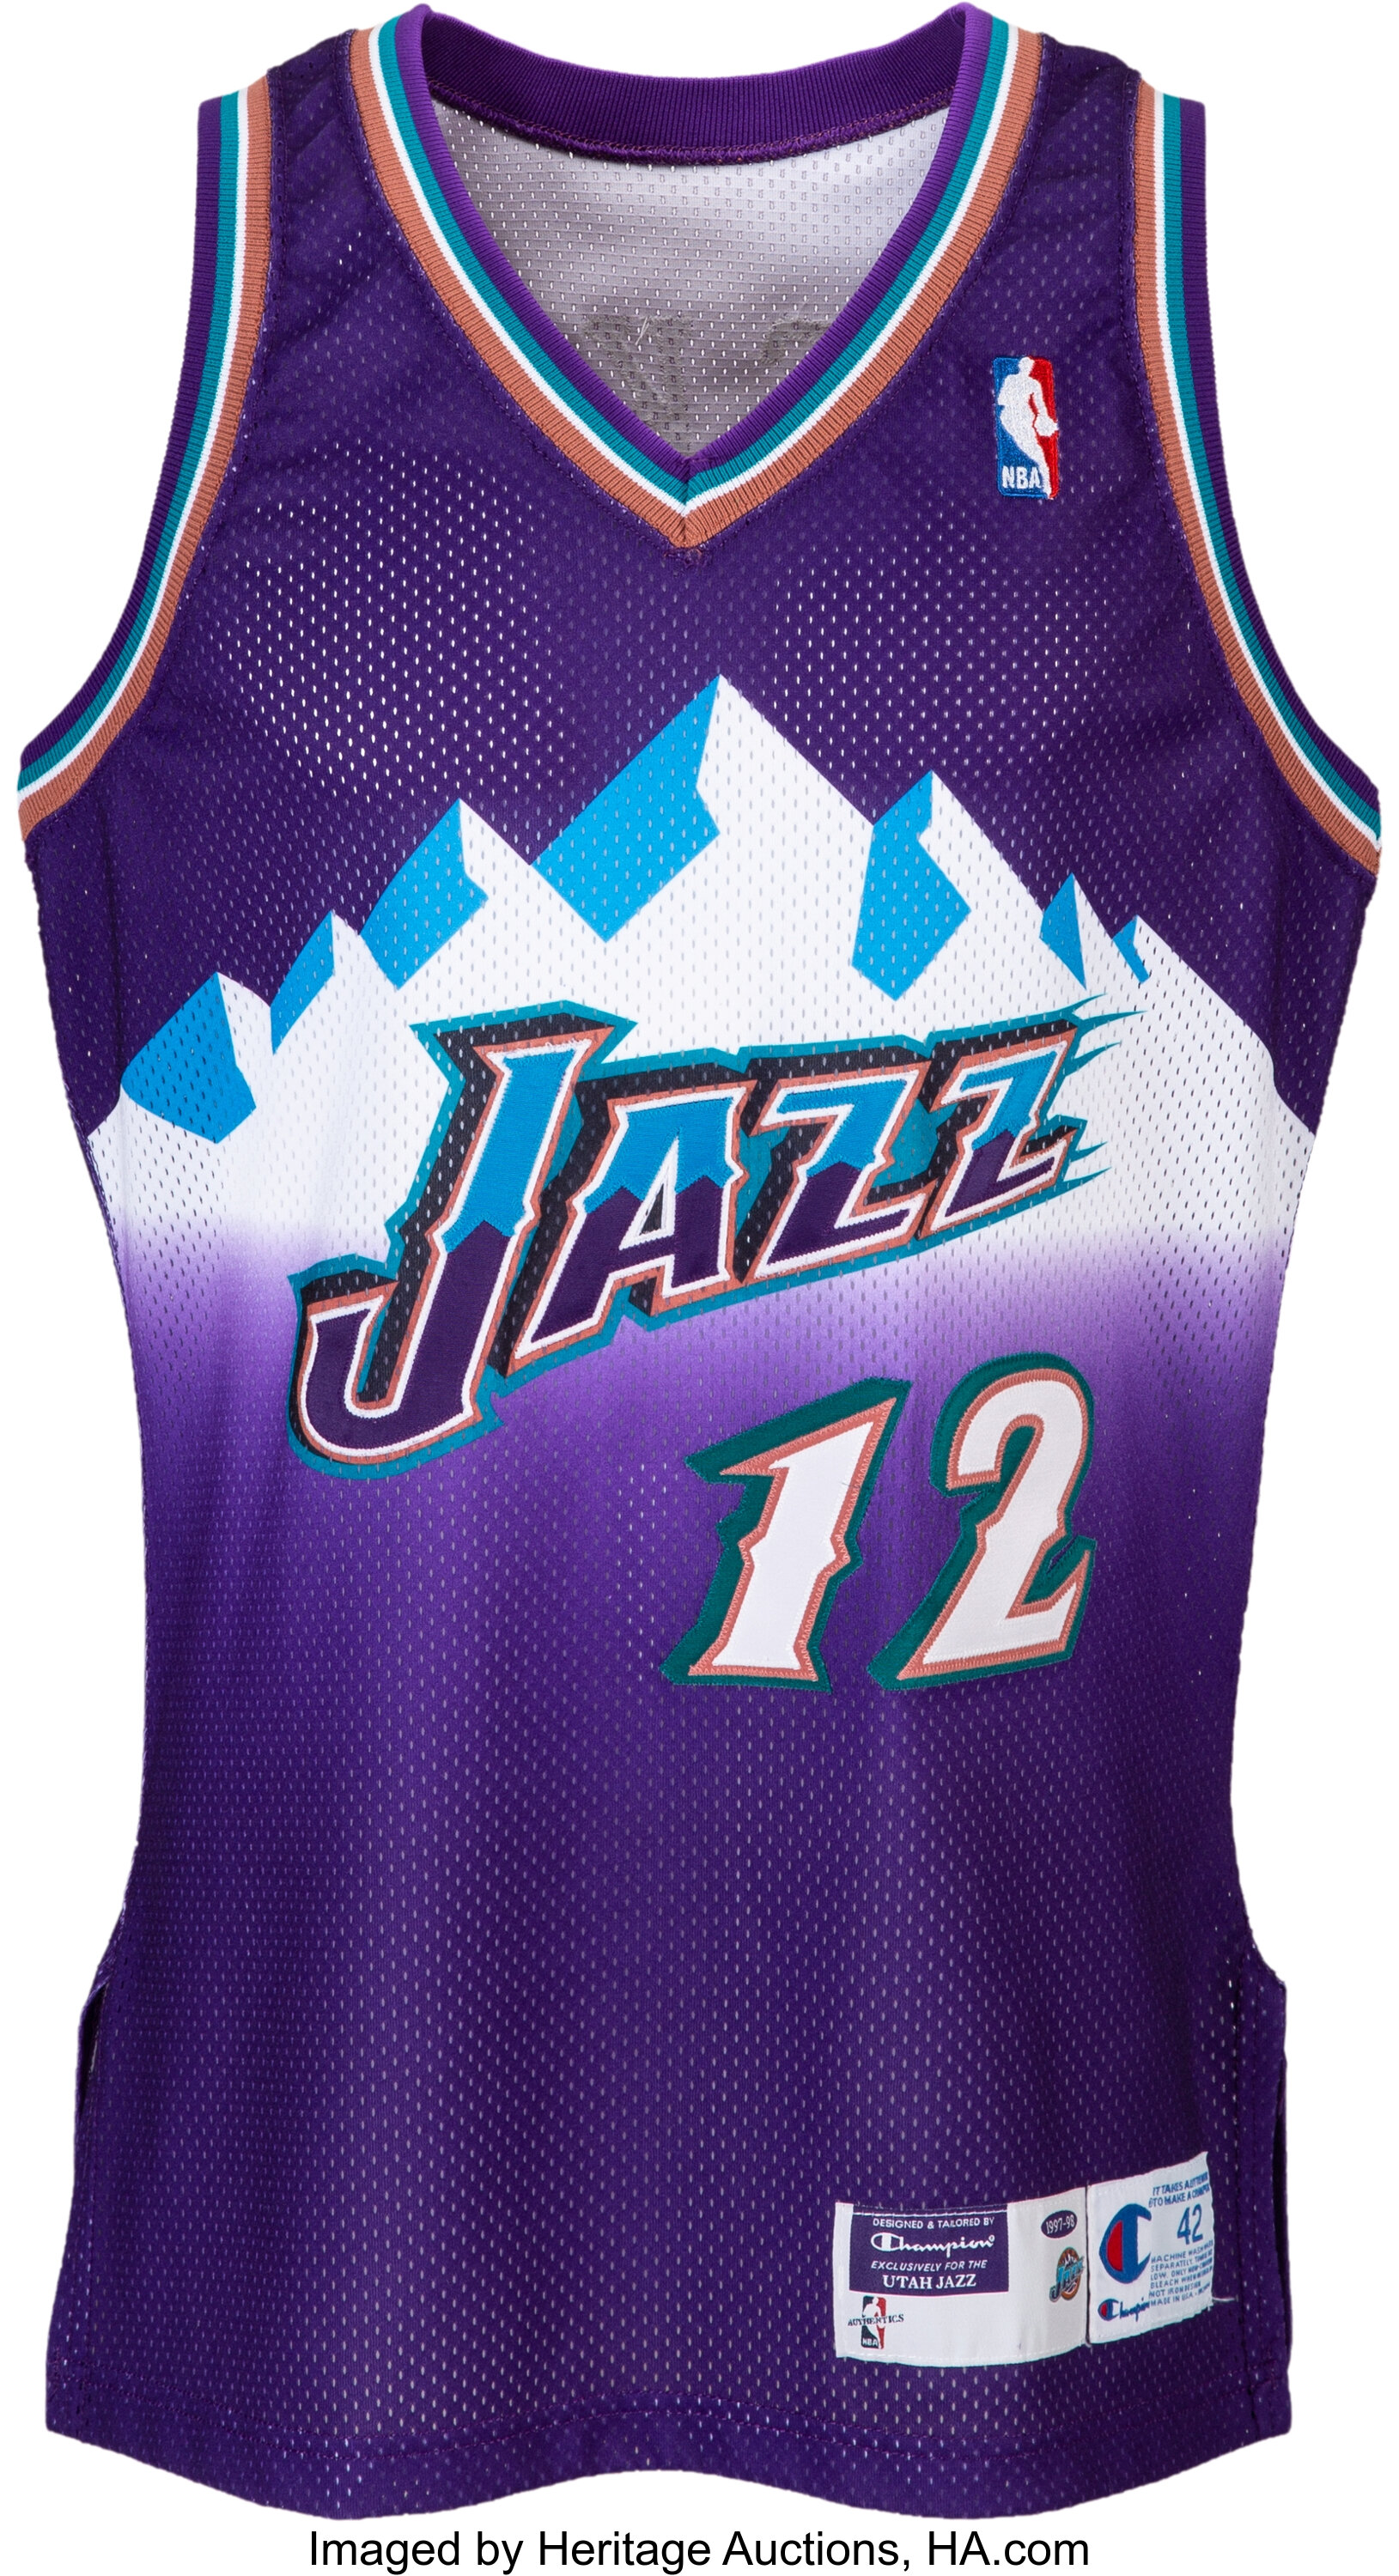 Utah Jazz Home Uniform  Utah jazz, Nba players, Jazz